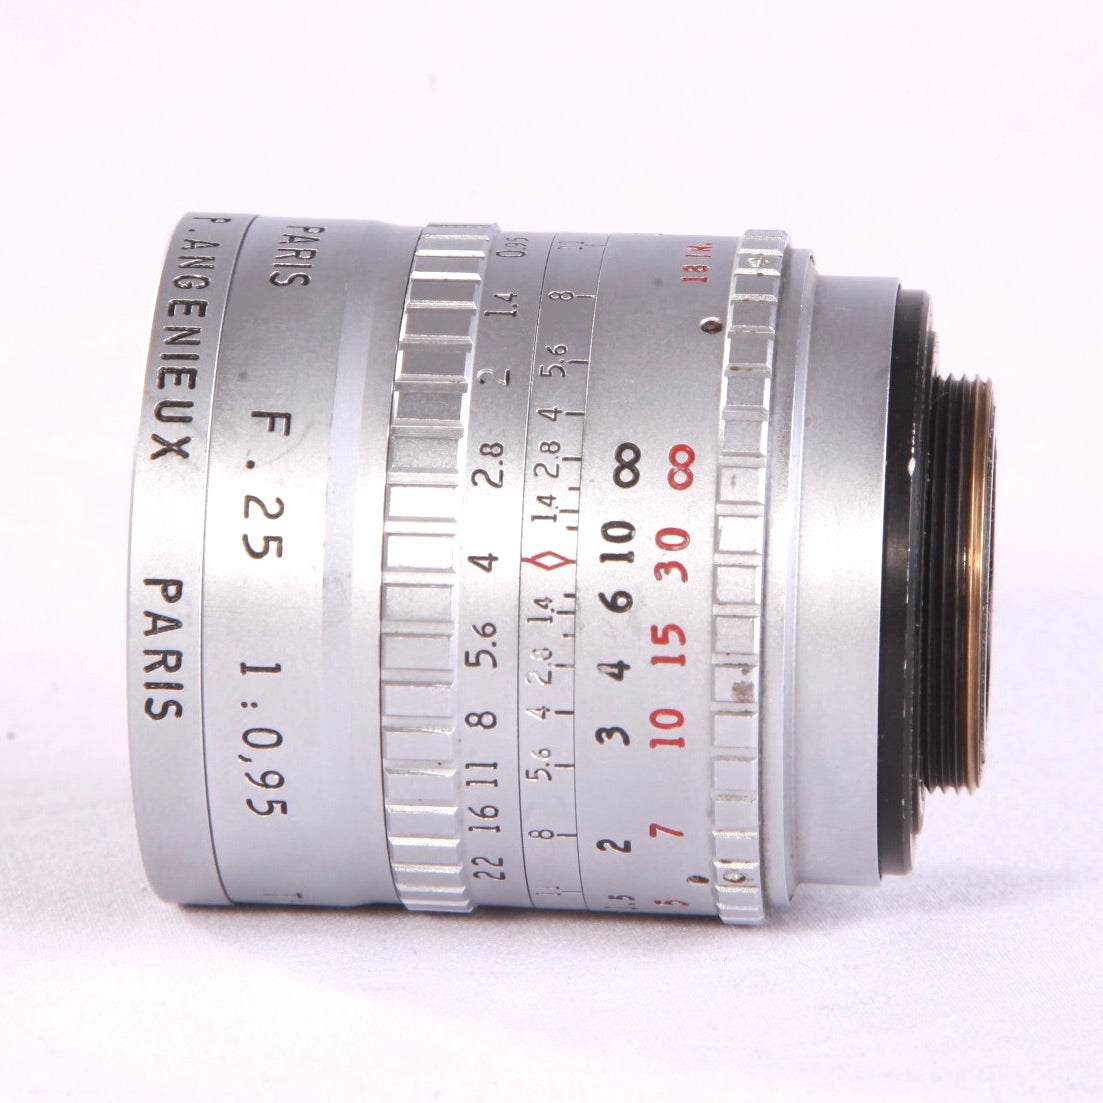 Angenieux 25mm f0.95 - c-mount lens